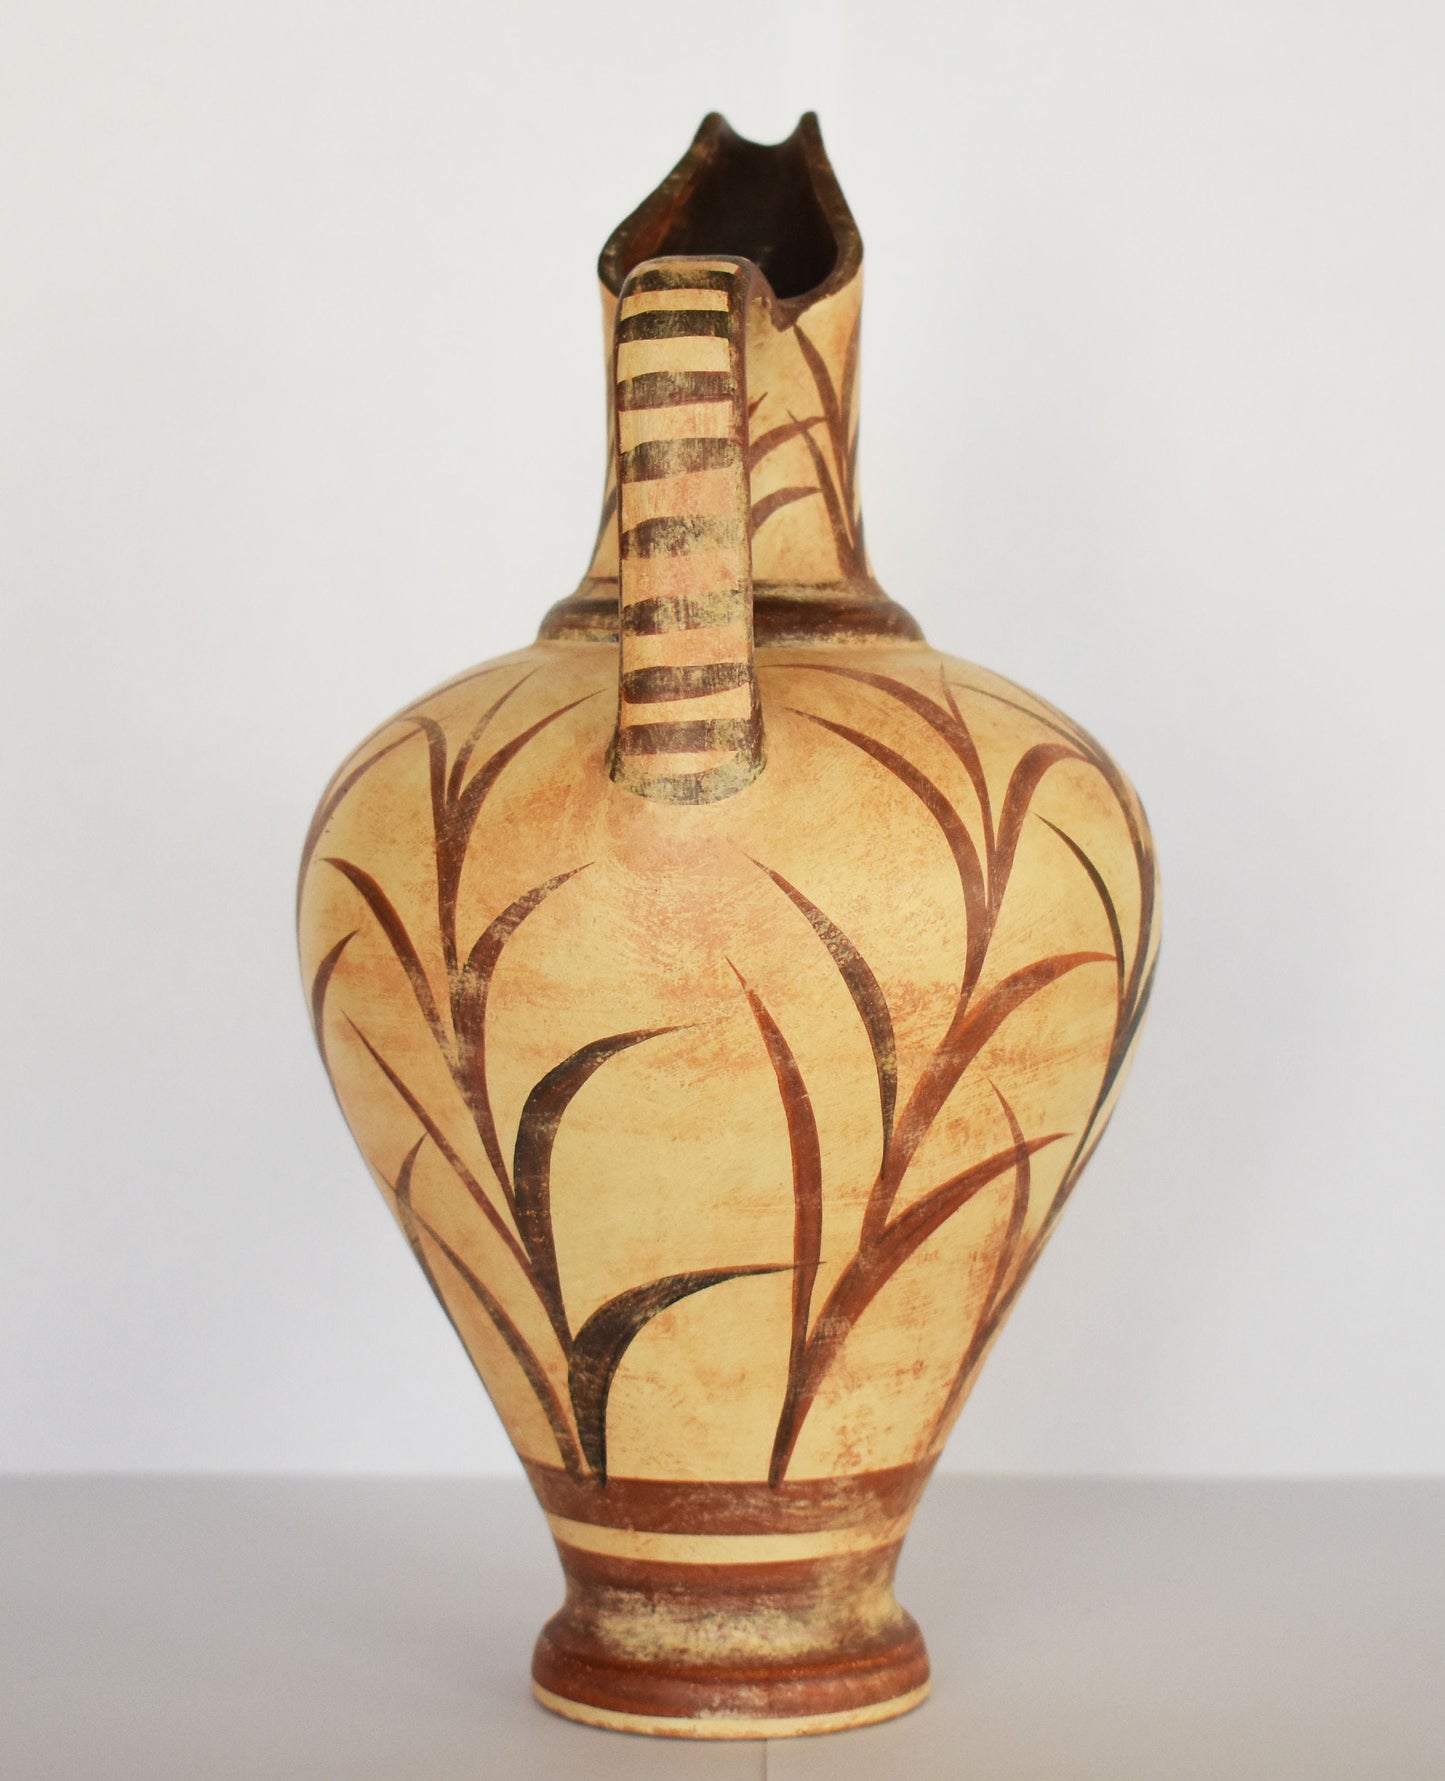 Vessel with Floral Design - Minoan - Neopalatian Period - 1700 - 1380 BC - Small - Ceramic Vase